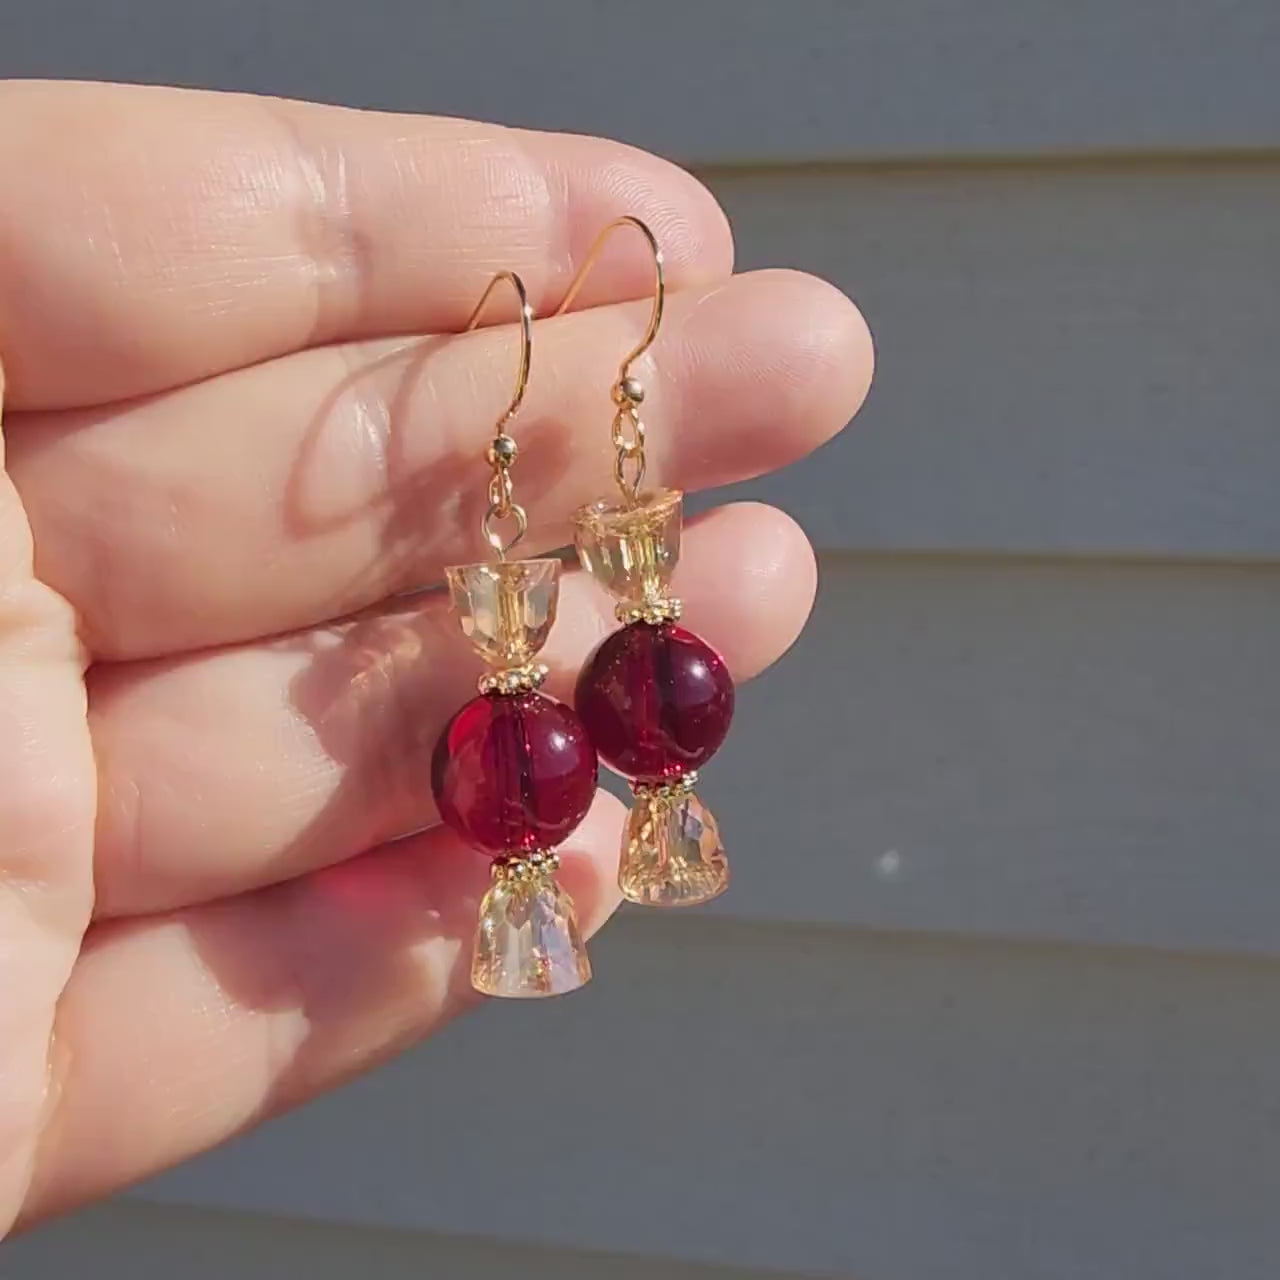 Bubble Candy earrings, sweet crystal candy earrings, cute fruit candy earrings, gift for her